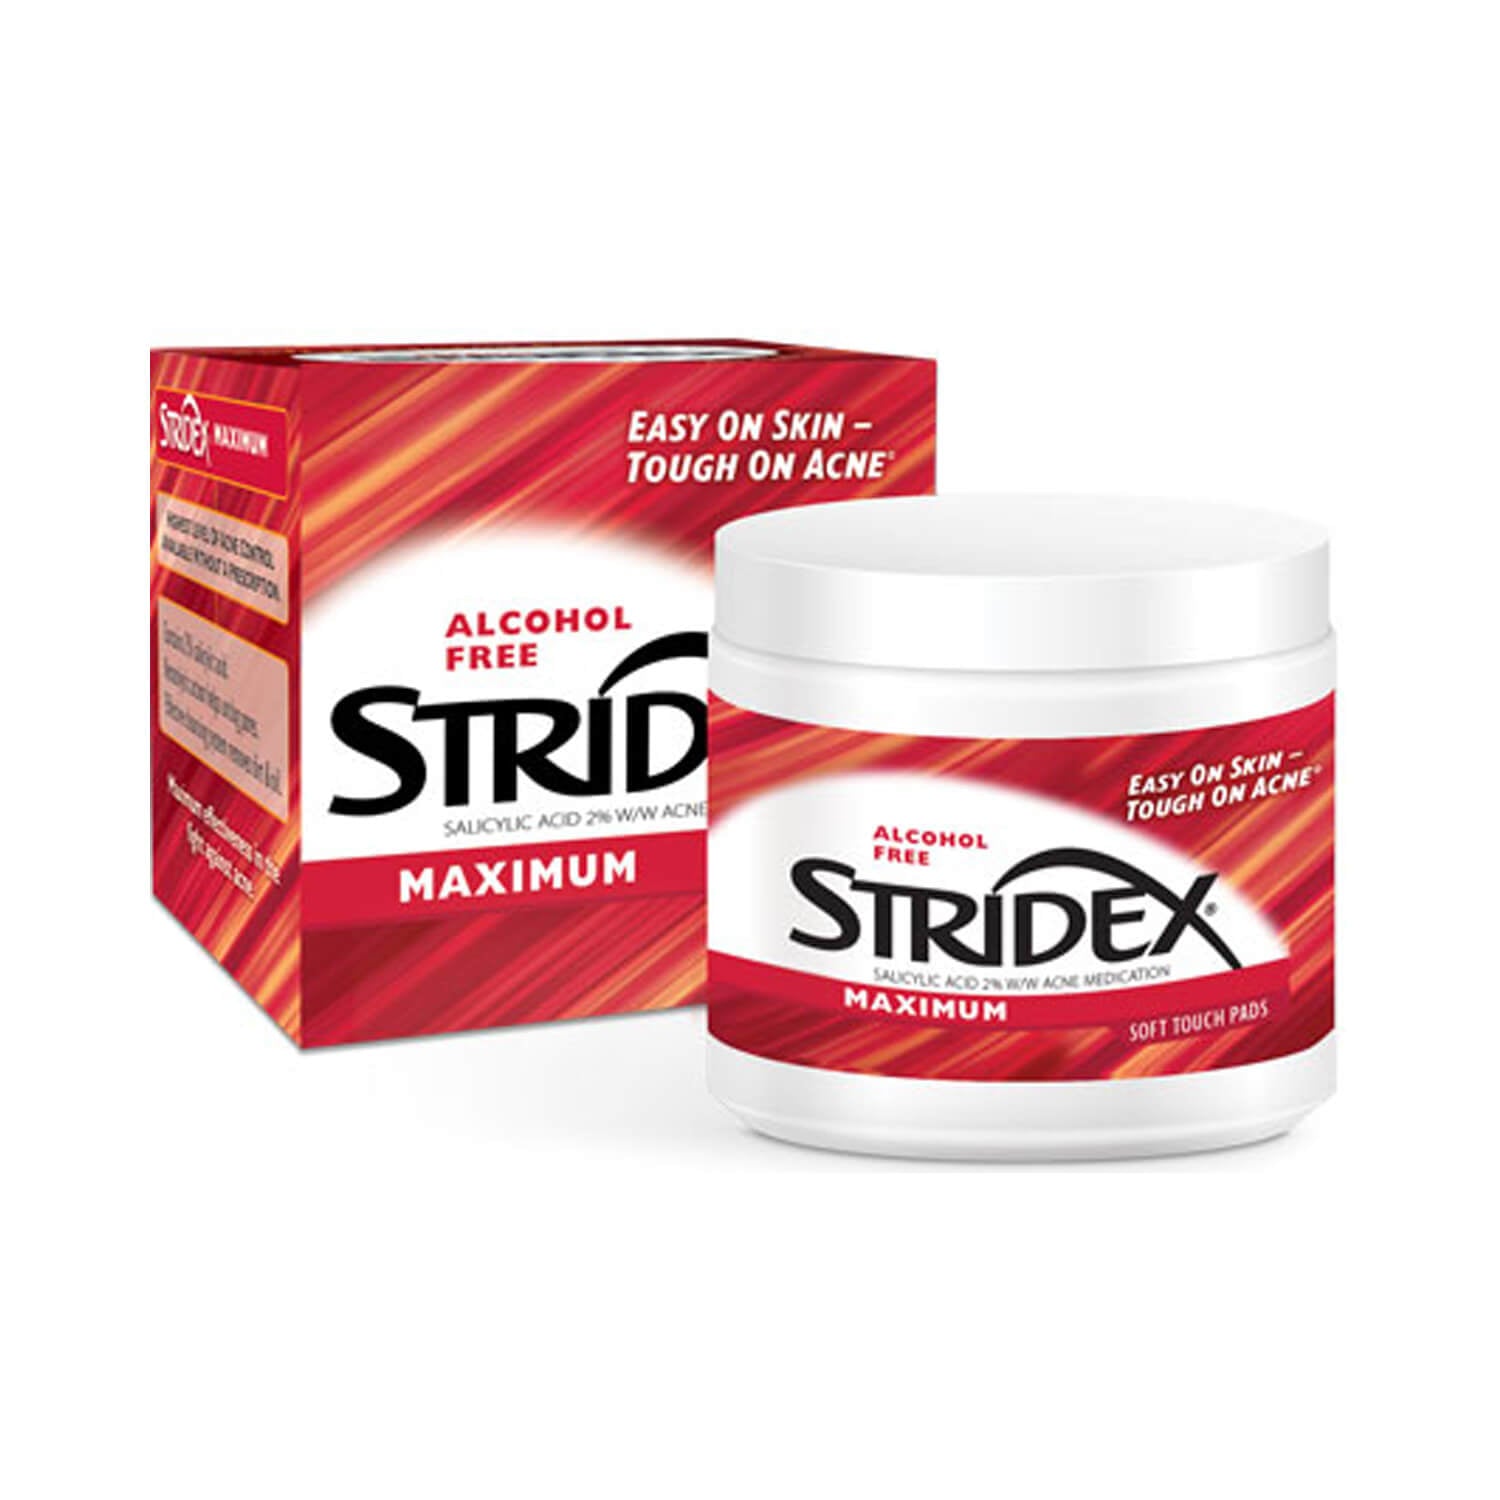 Stridex Strength Medicated Pads Maximum